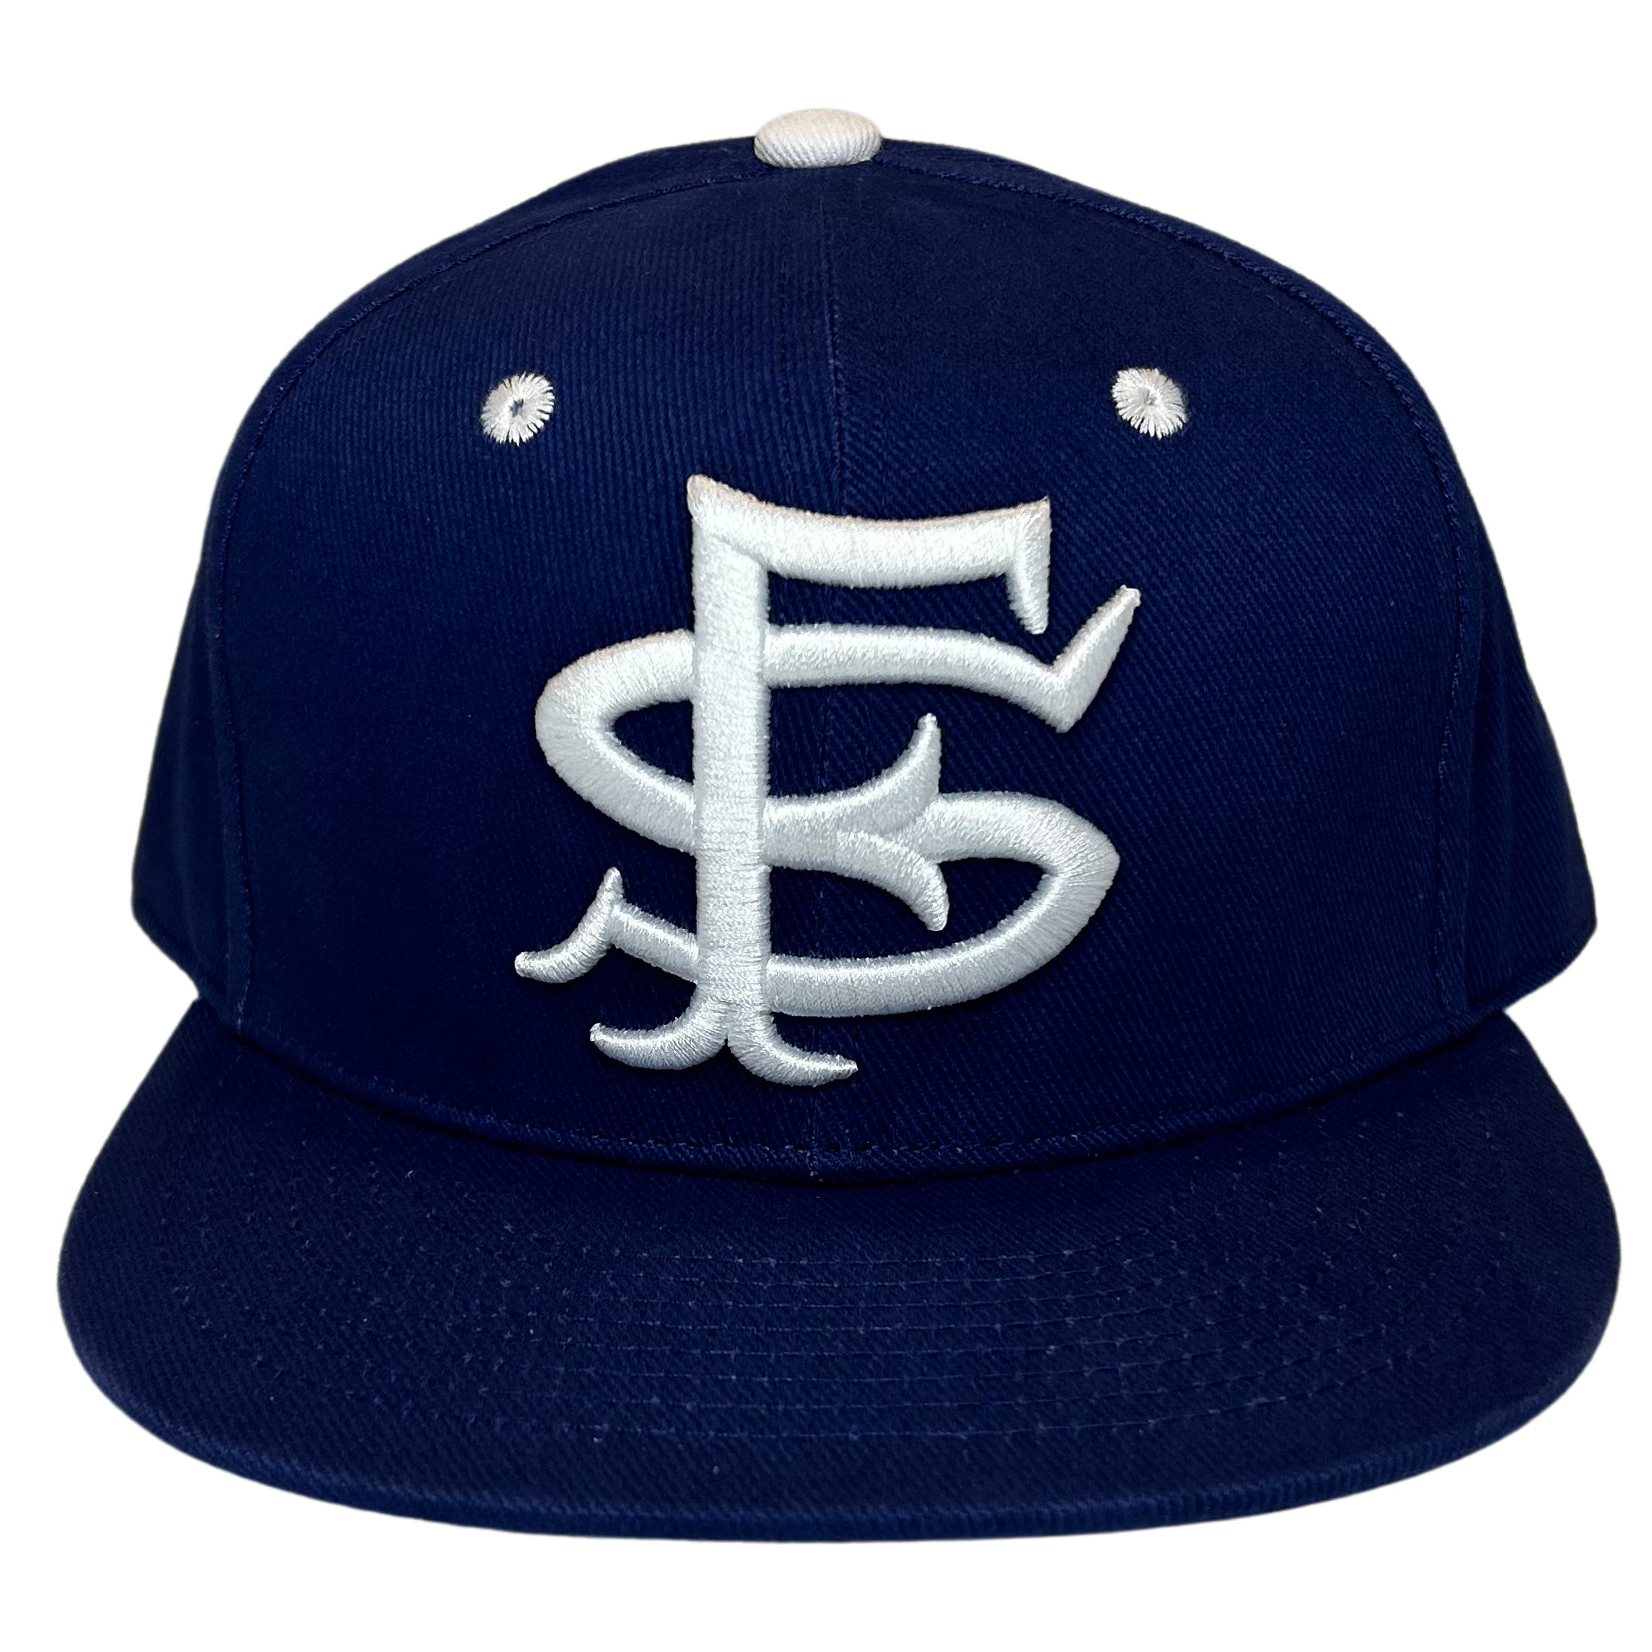 St. Louis Stars Royal Blue Vintage Baseball Hat